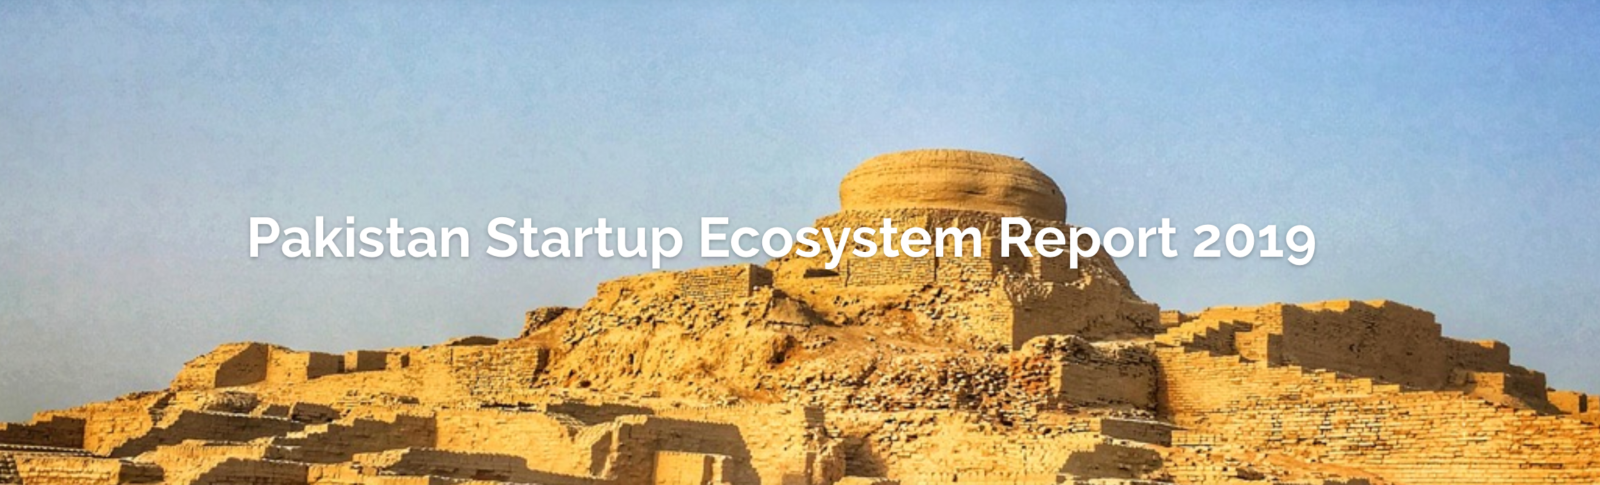 pakistan startup ecosystem report 2019